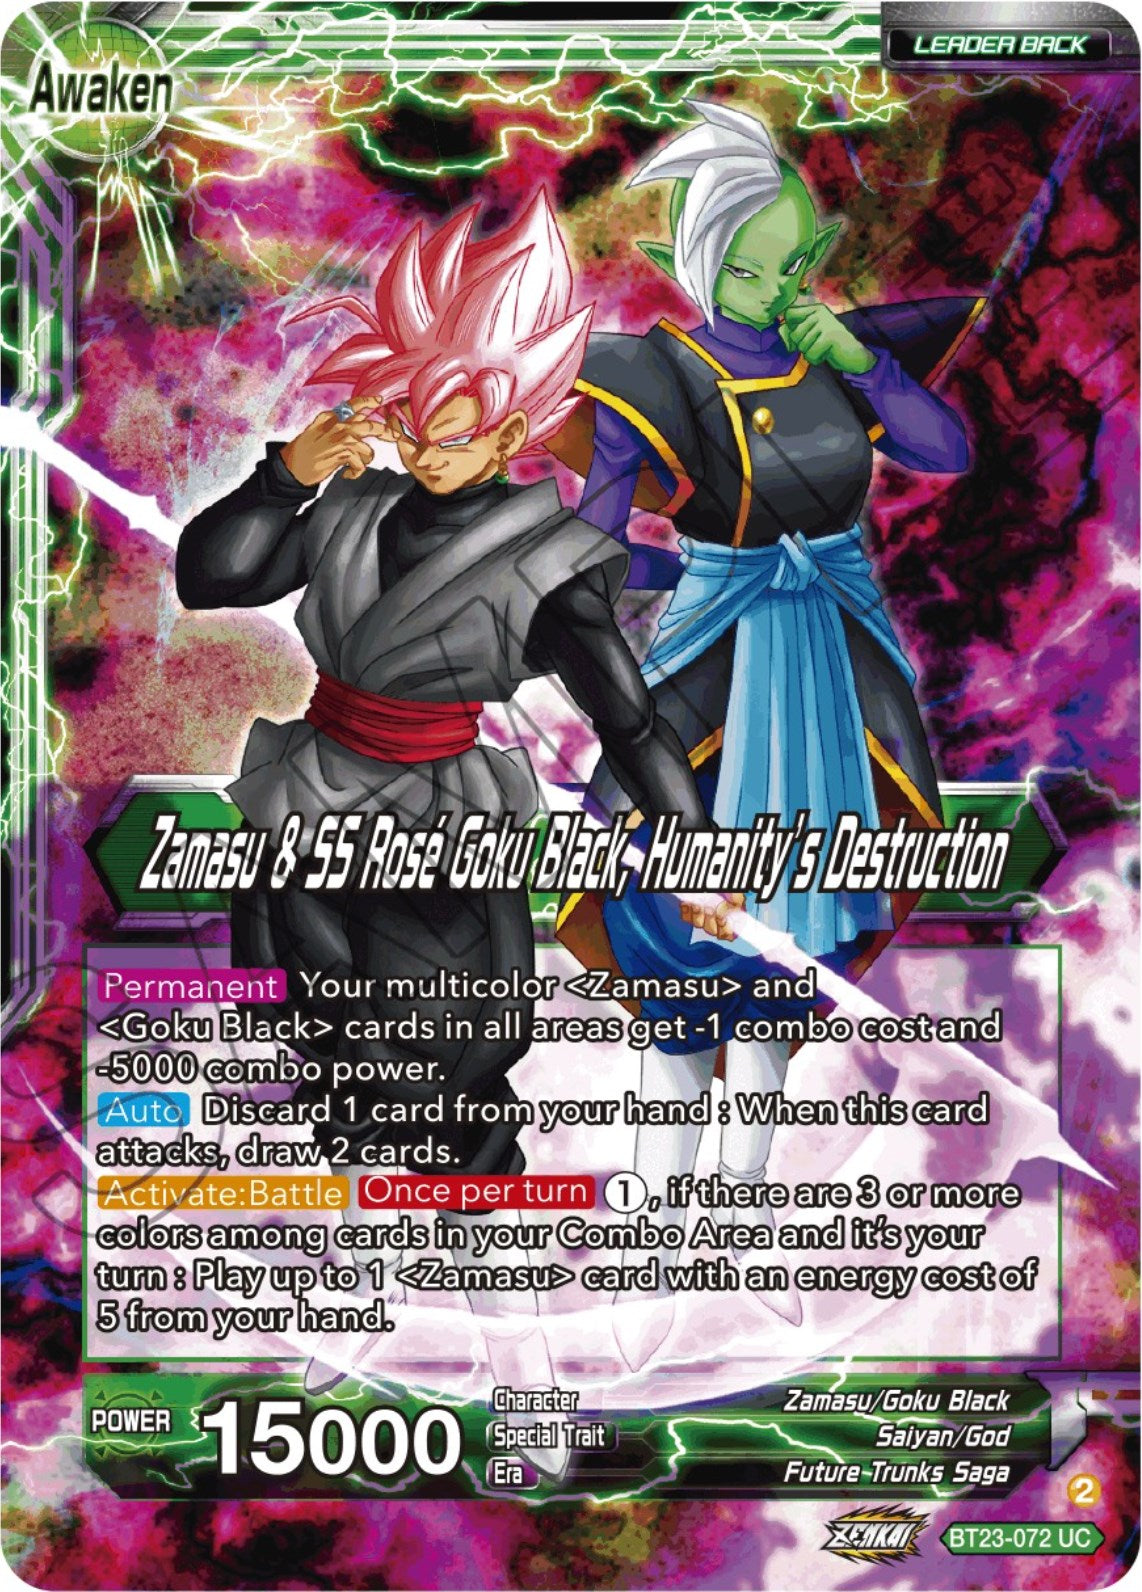 Zamasu & Goku Black // Zamasu & SS Rose Goku Black, Humanity's Destruction (BT23-072) [Perfect Combination] | Enigma On Main